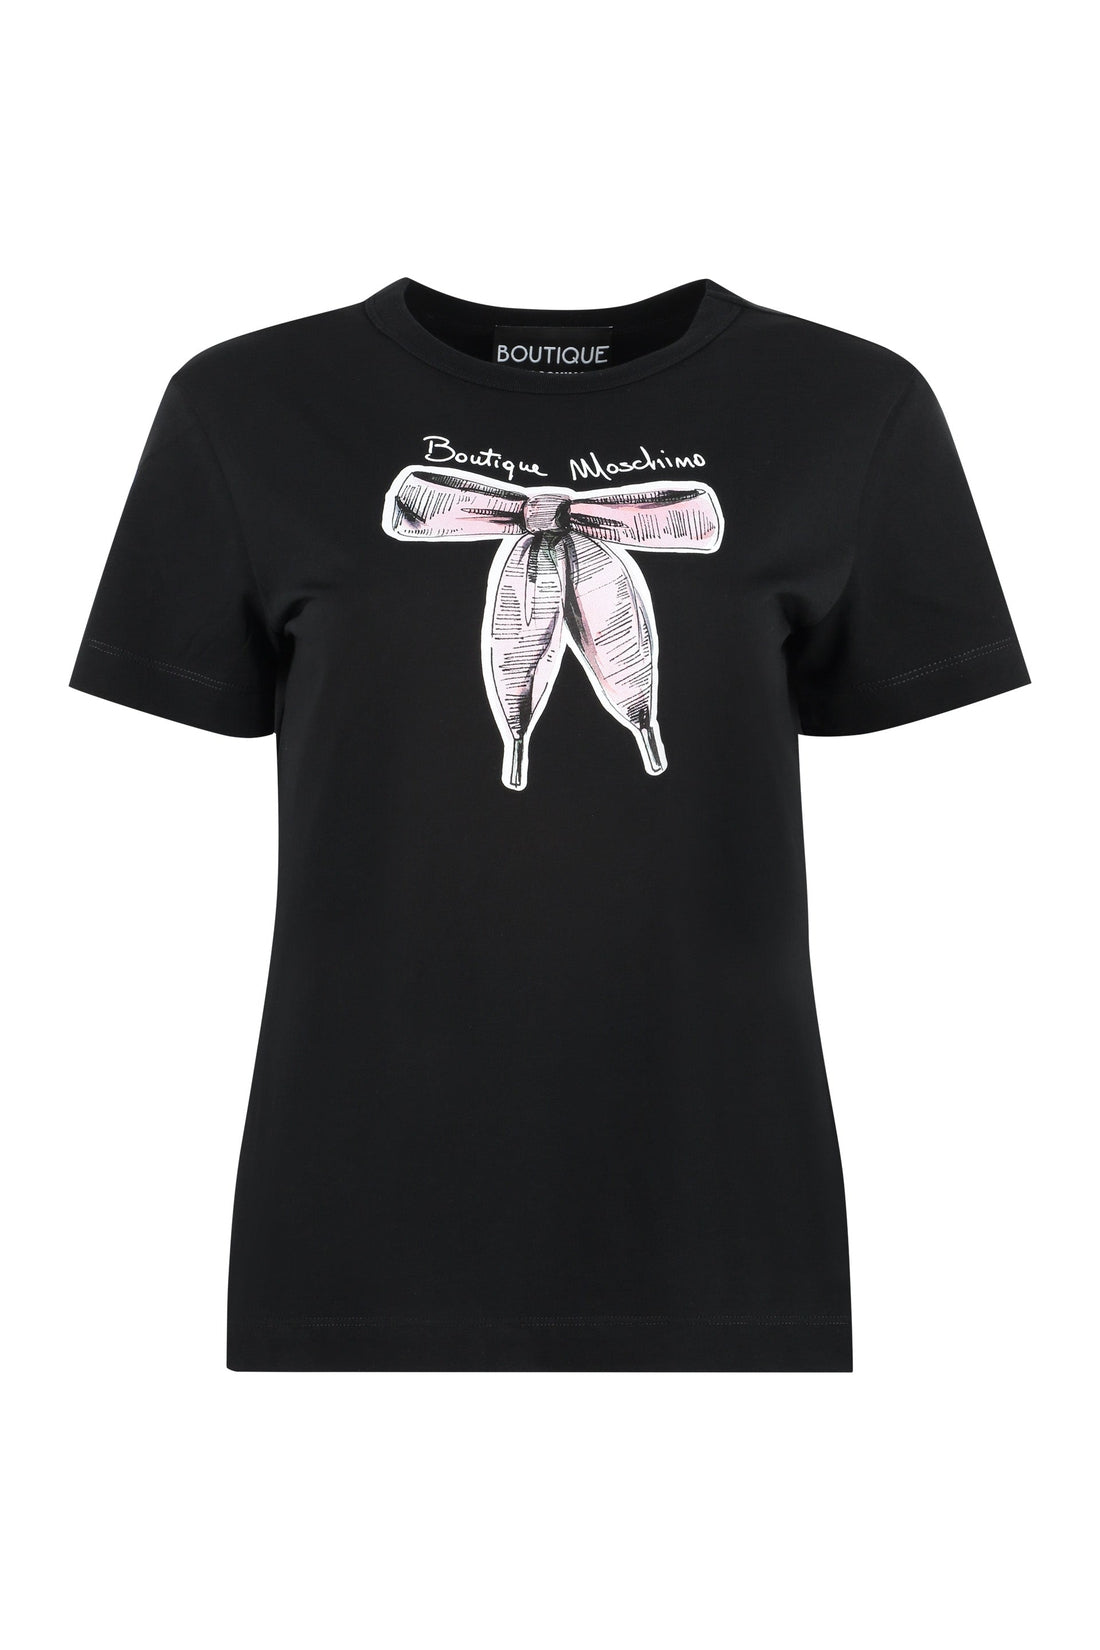 Boutique Moschino-OUTLET-SALE-Printed cotton T-shirt-ARCHIVIST